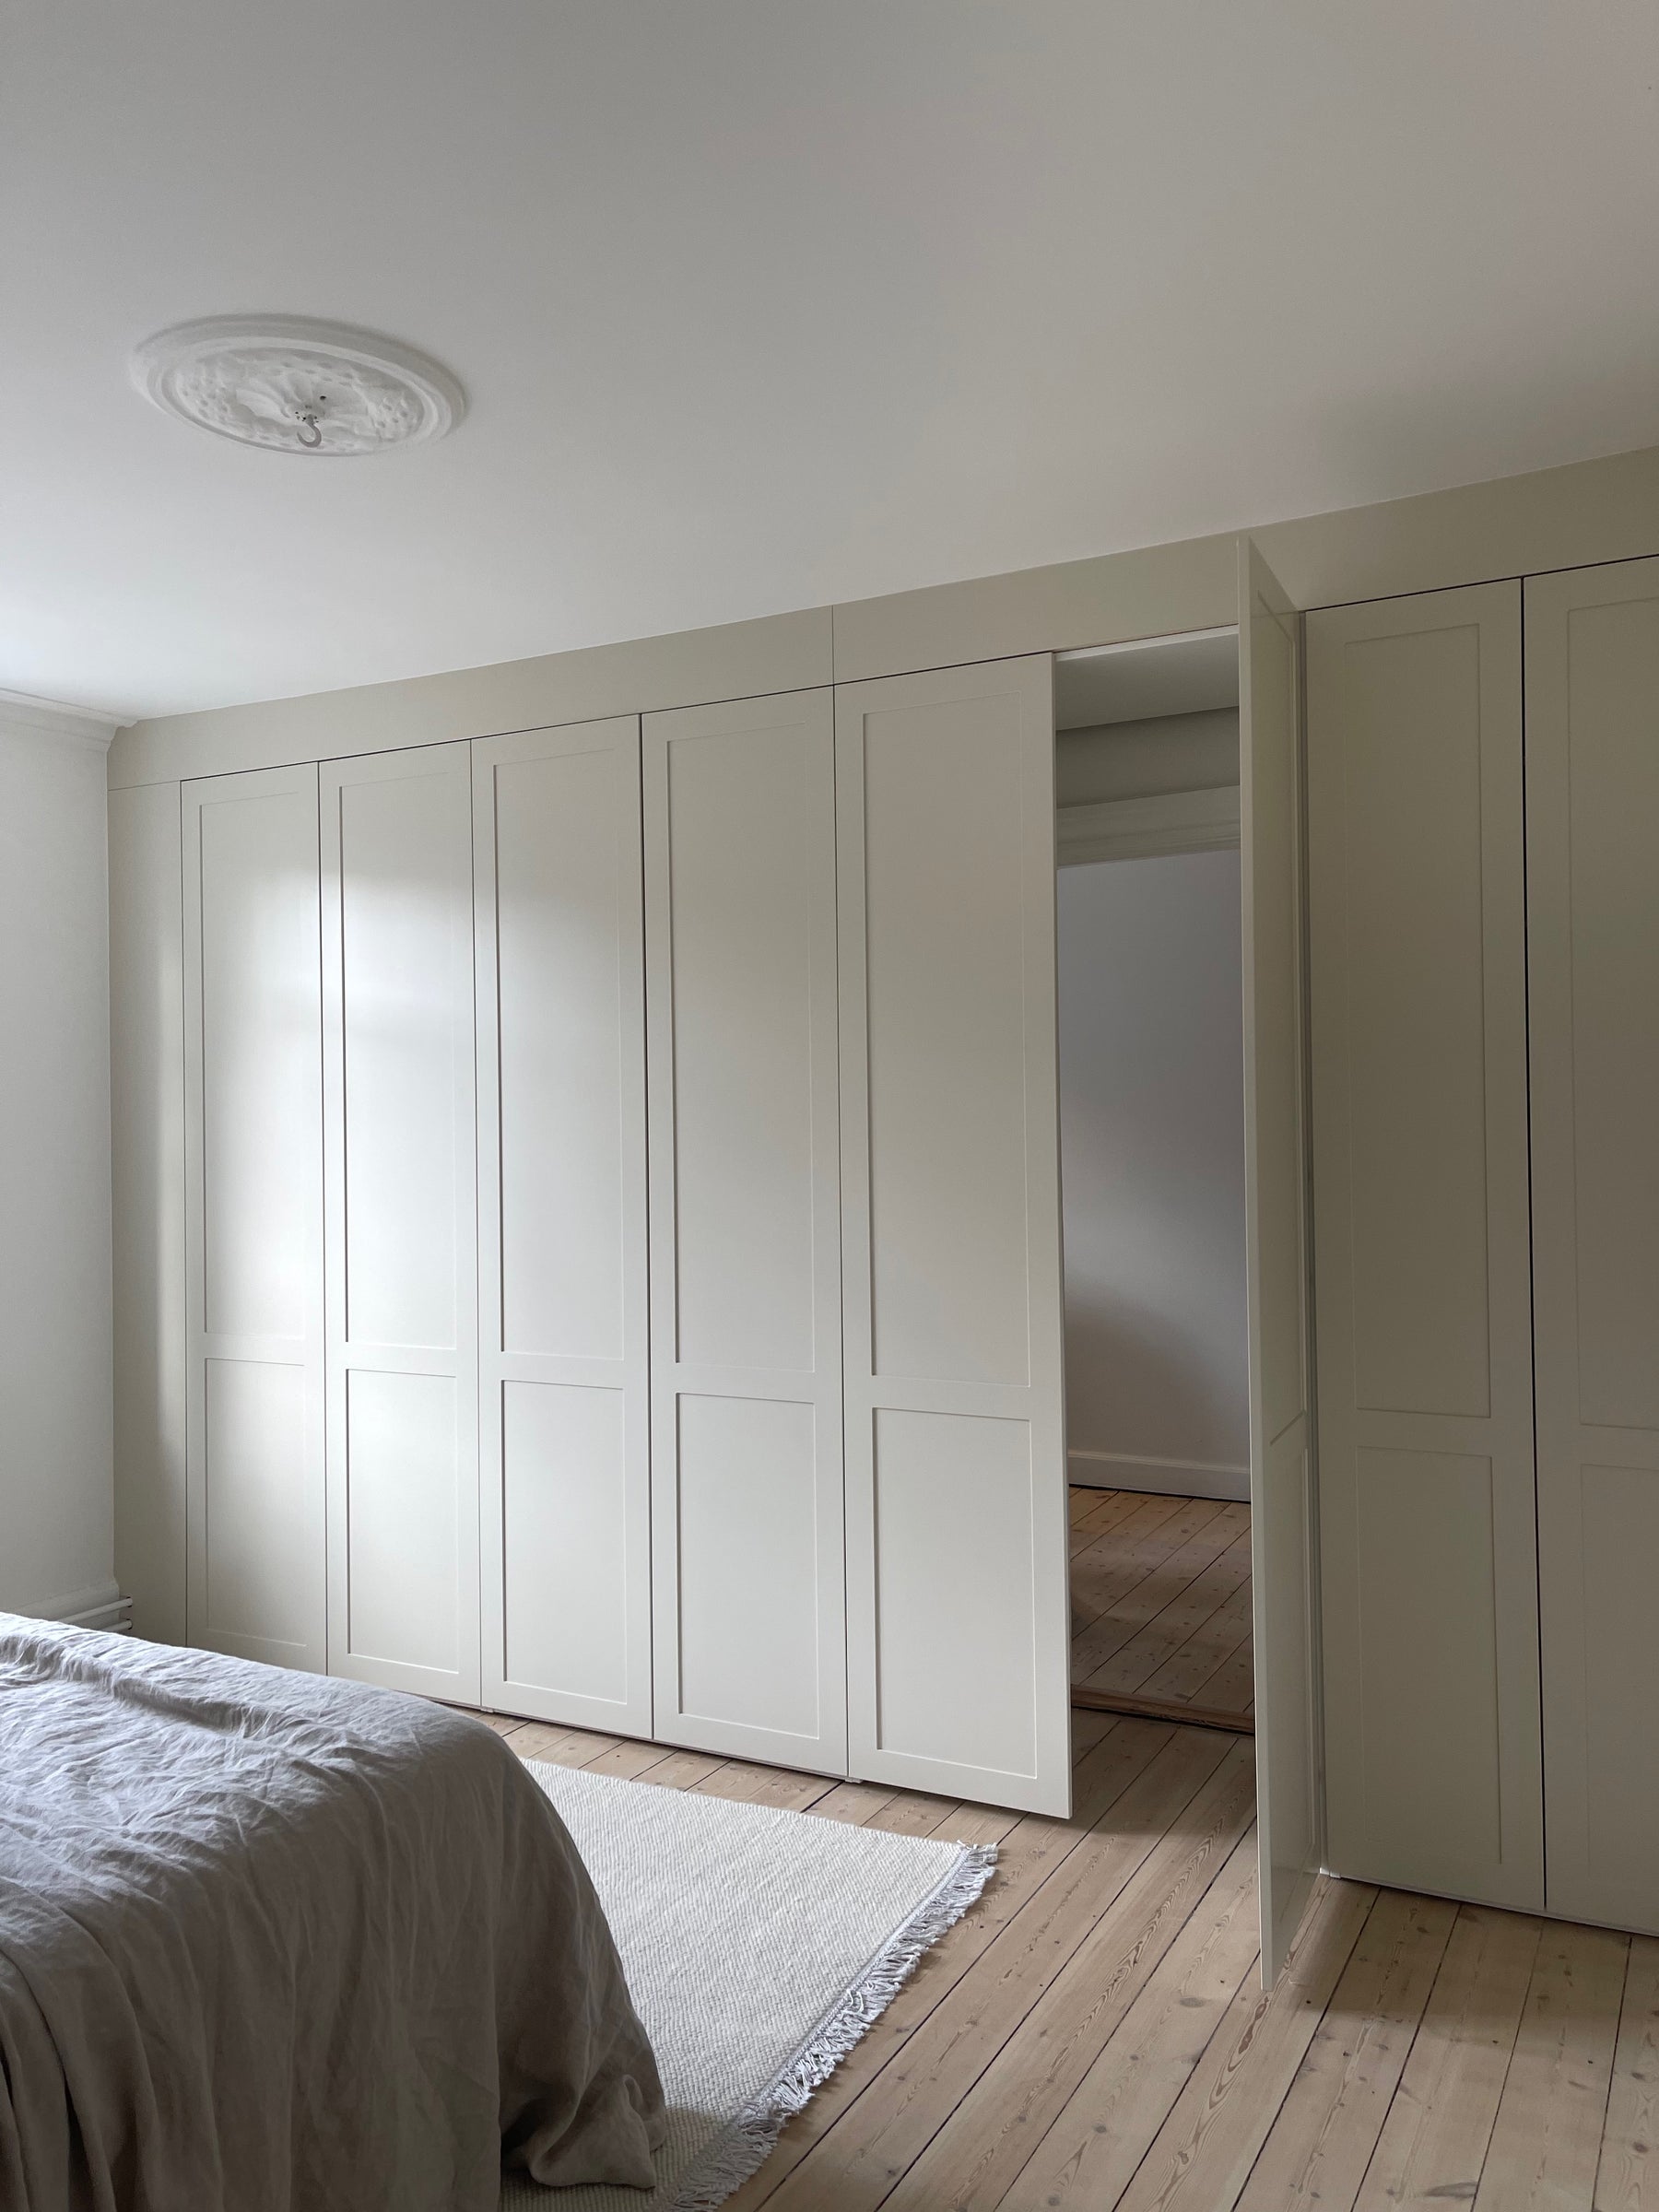 A.S.Helsingö Ensiö built-in wardrobe in ivory beige color in bedroom